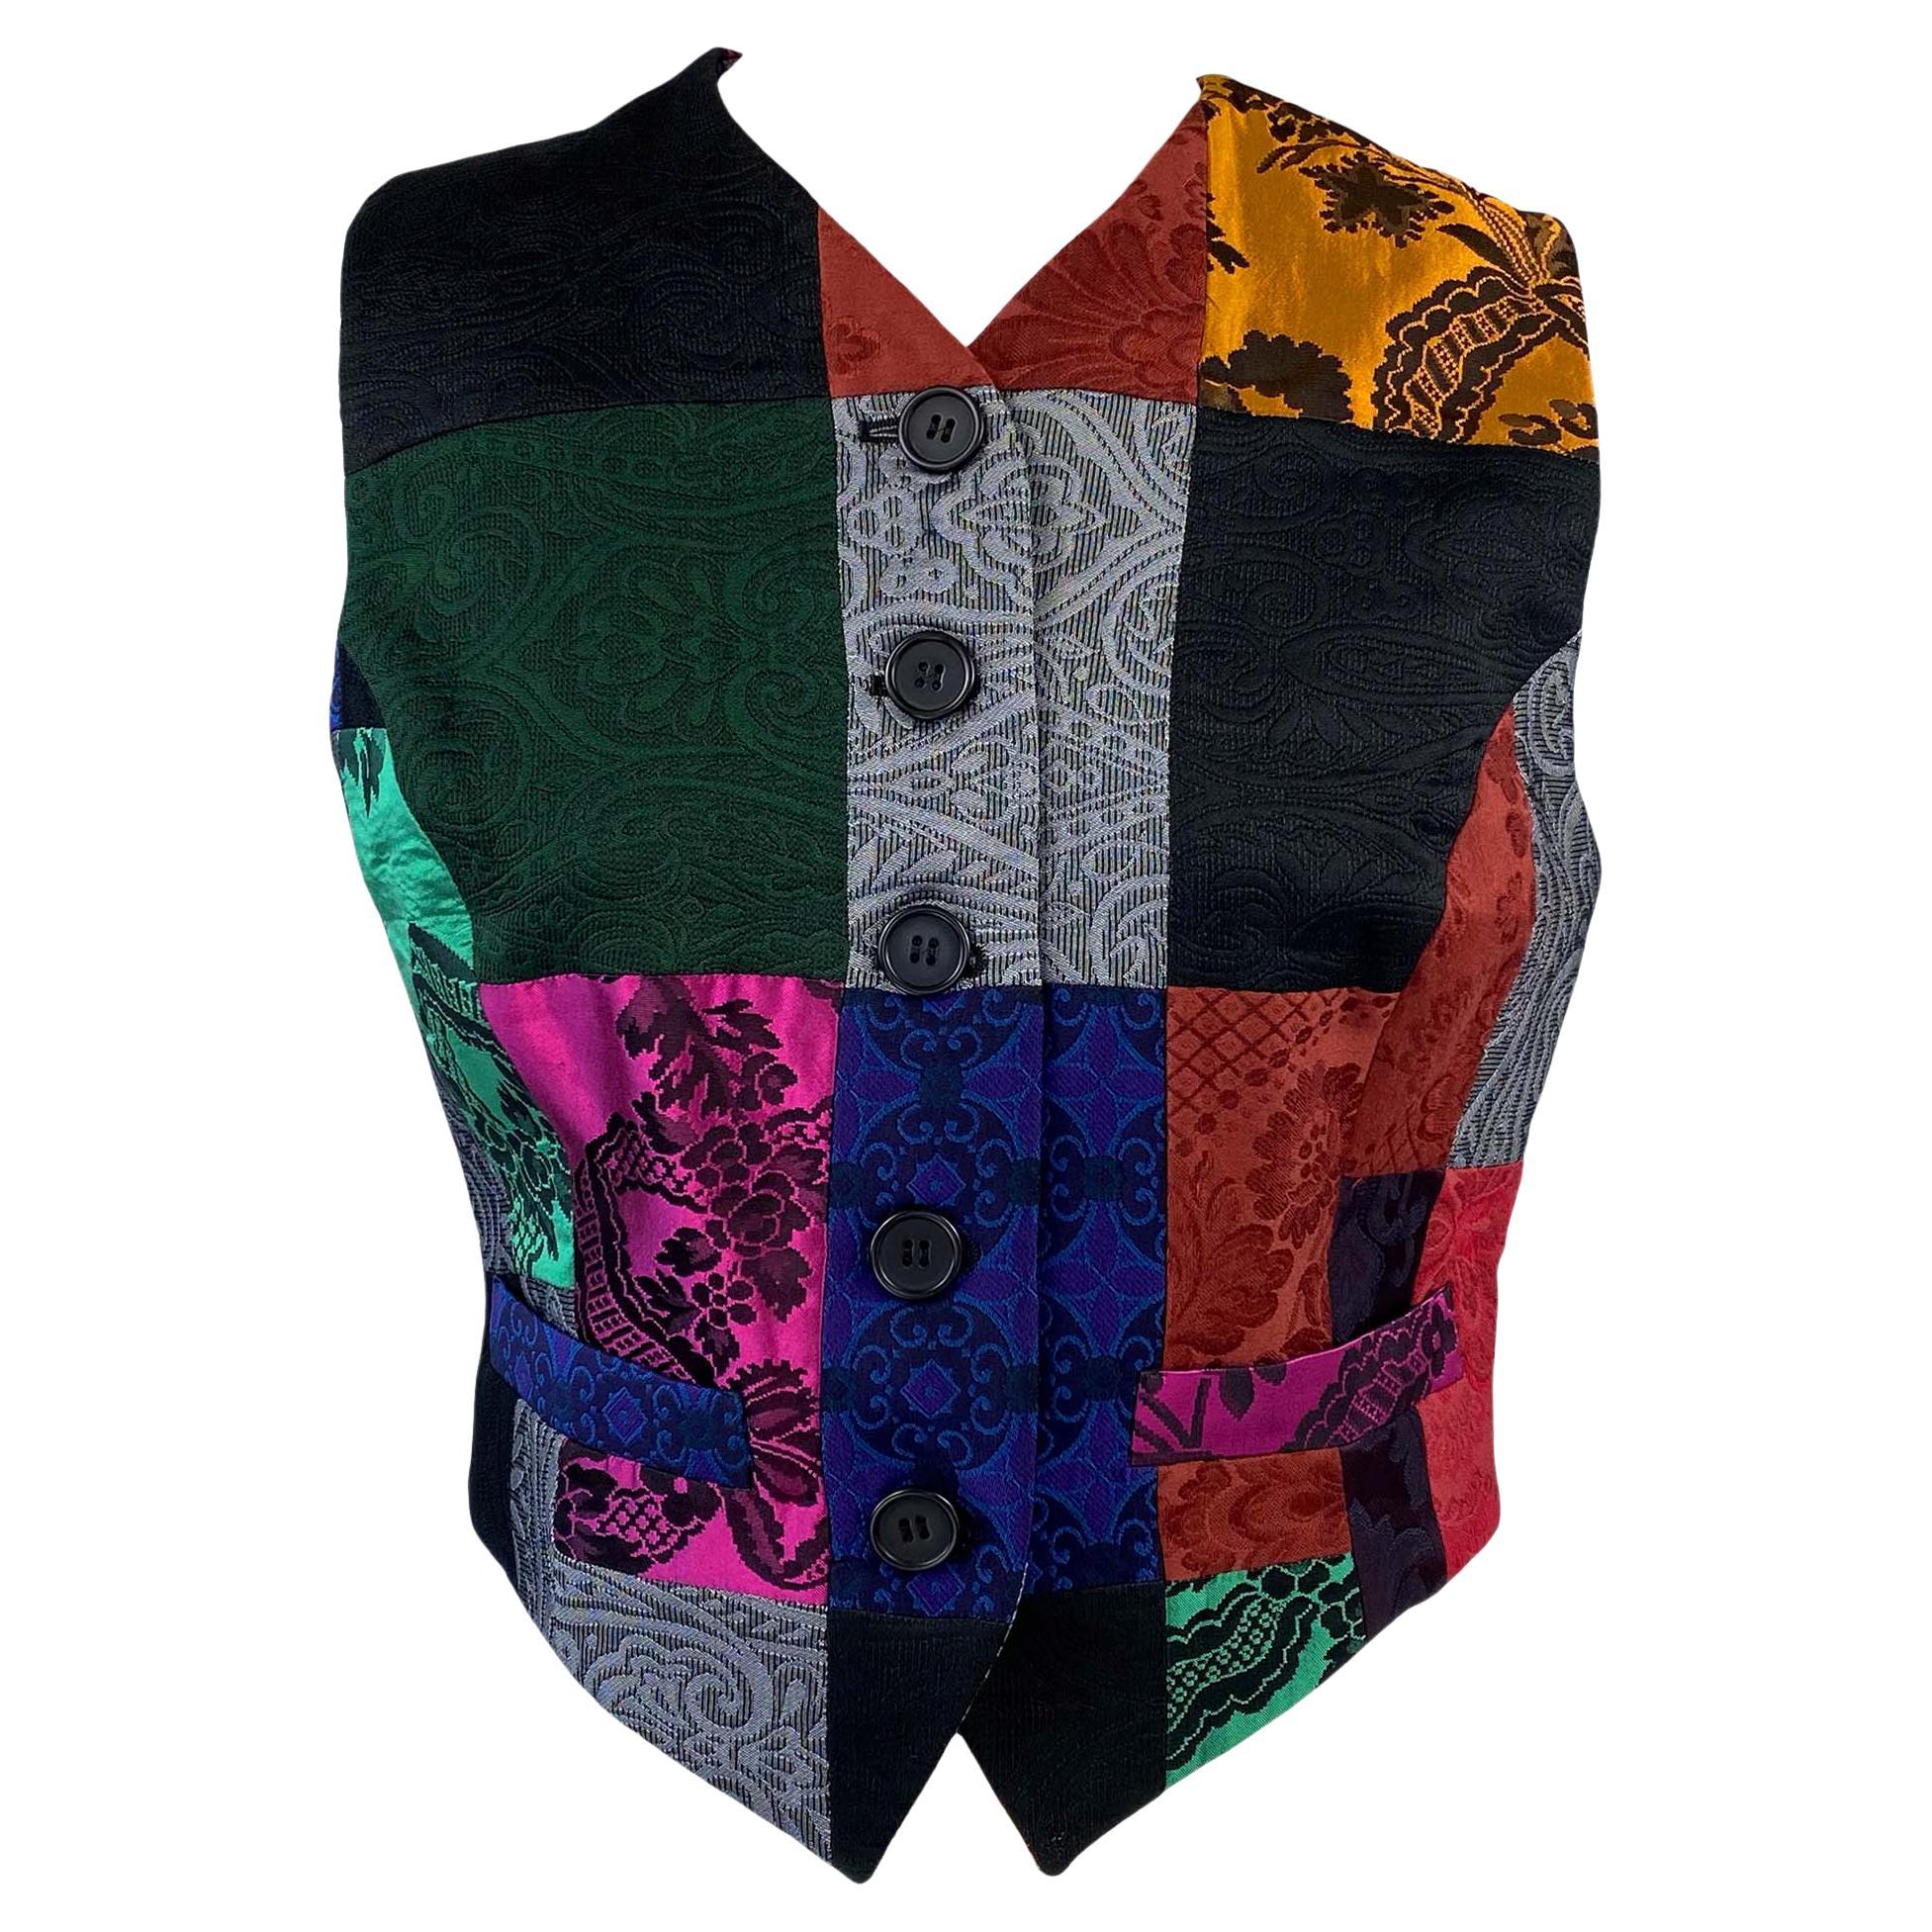 S/S 1993 Dolce & Gabbana Patchwork Button Up Bohemian Vest 